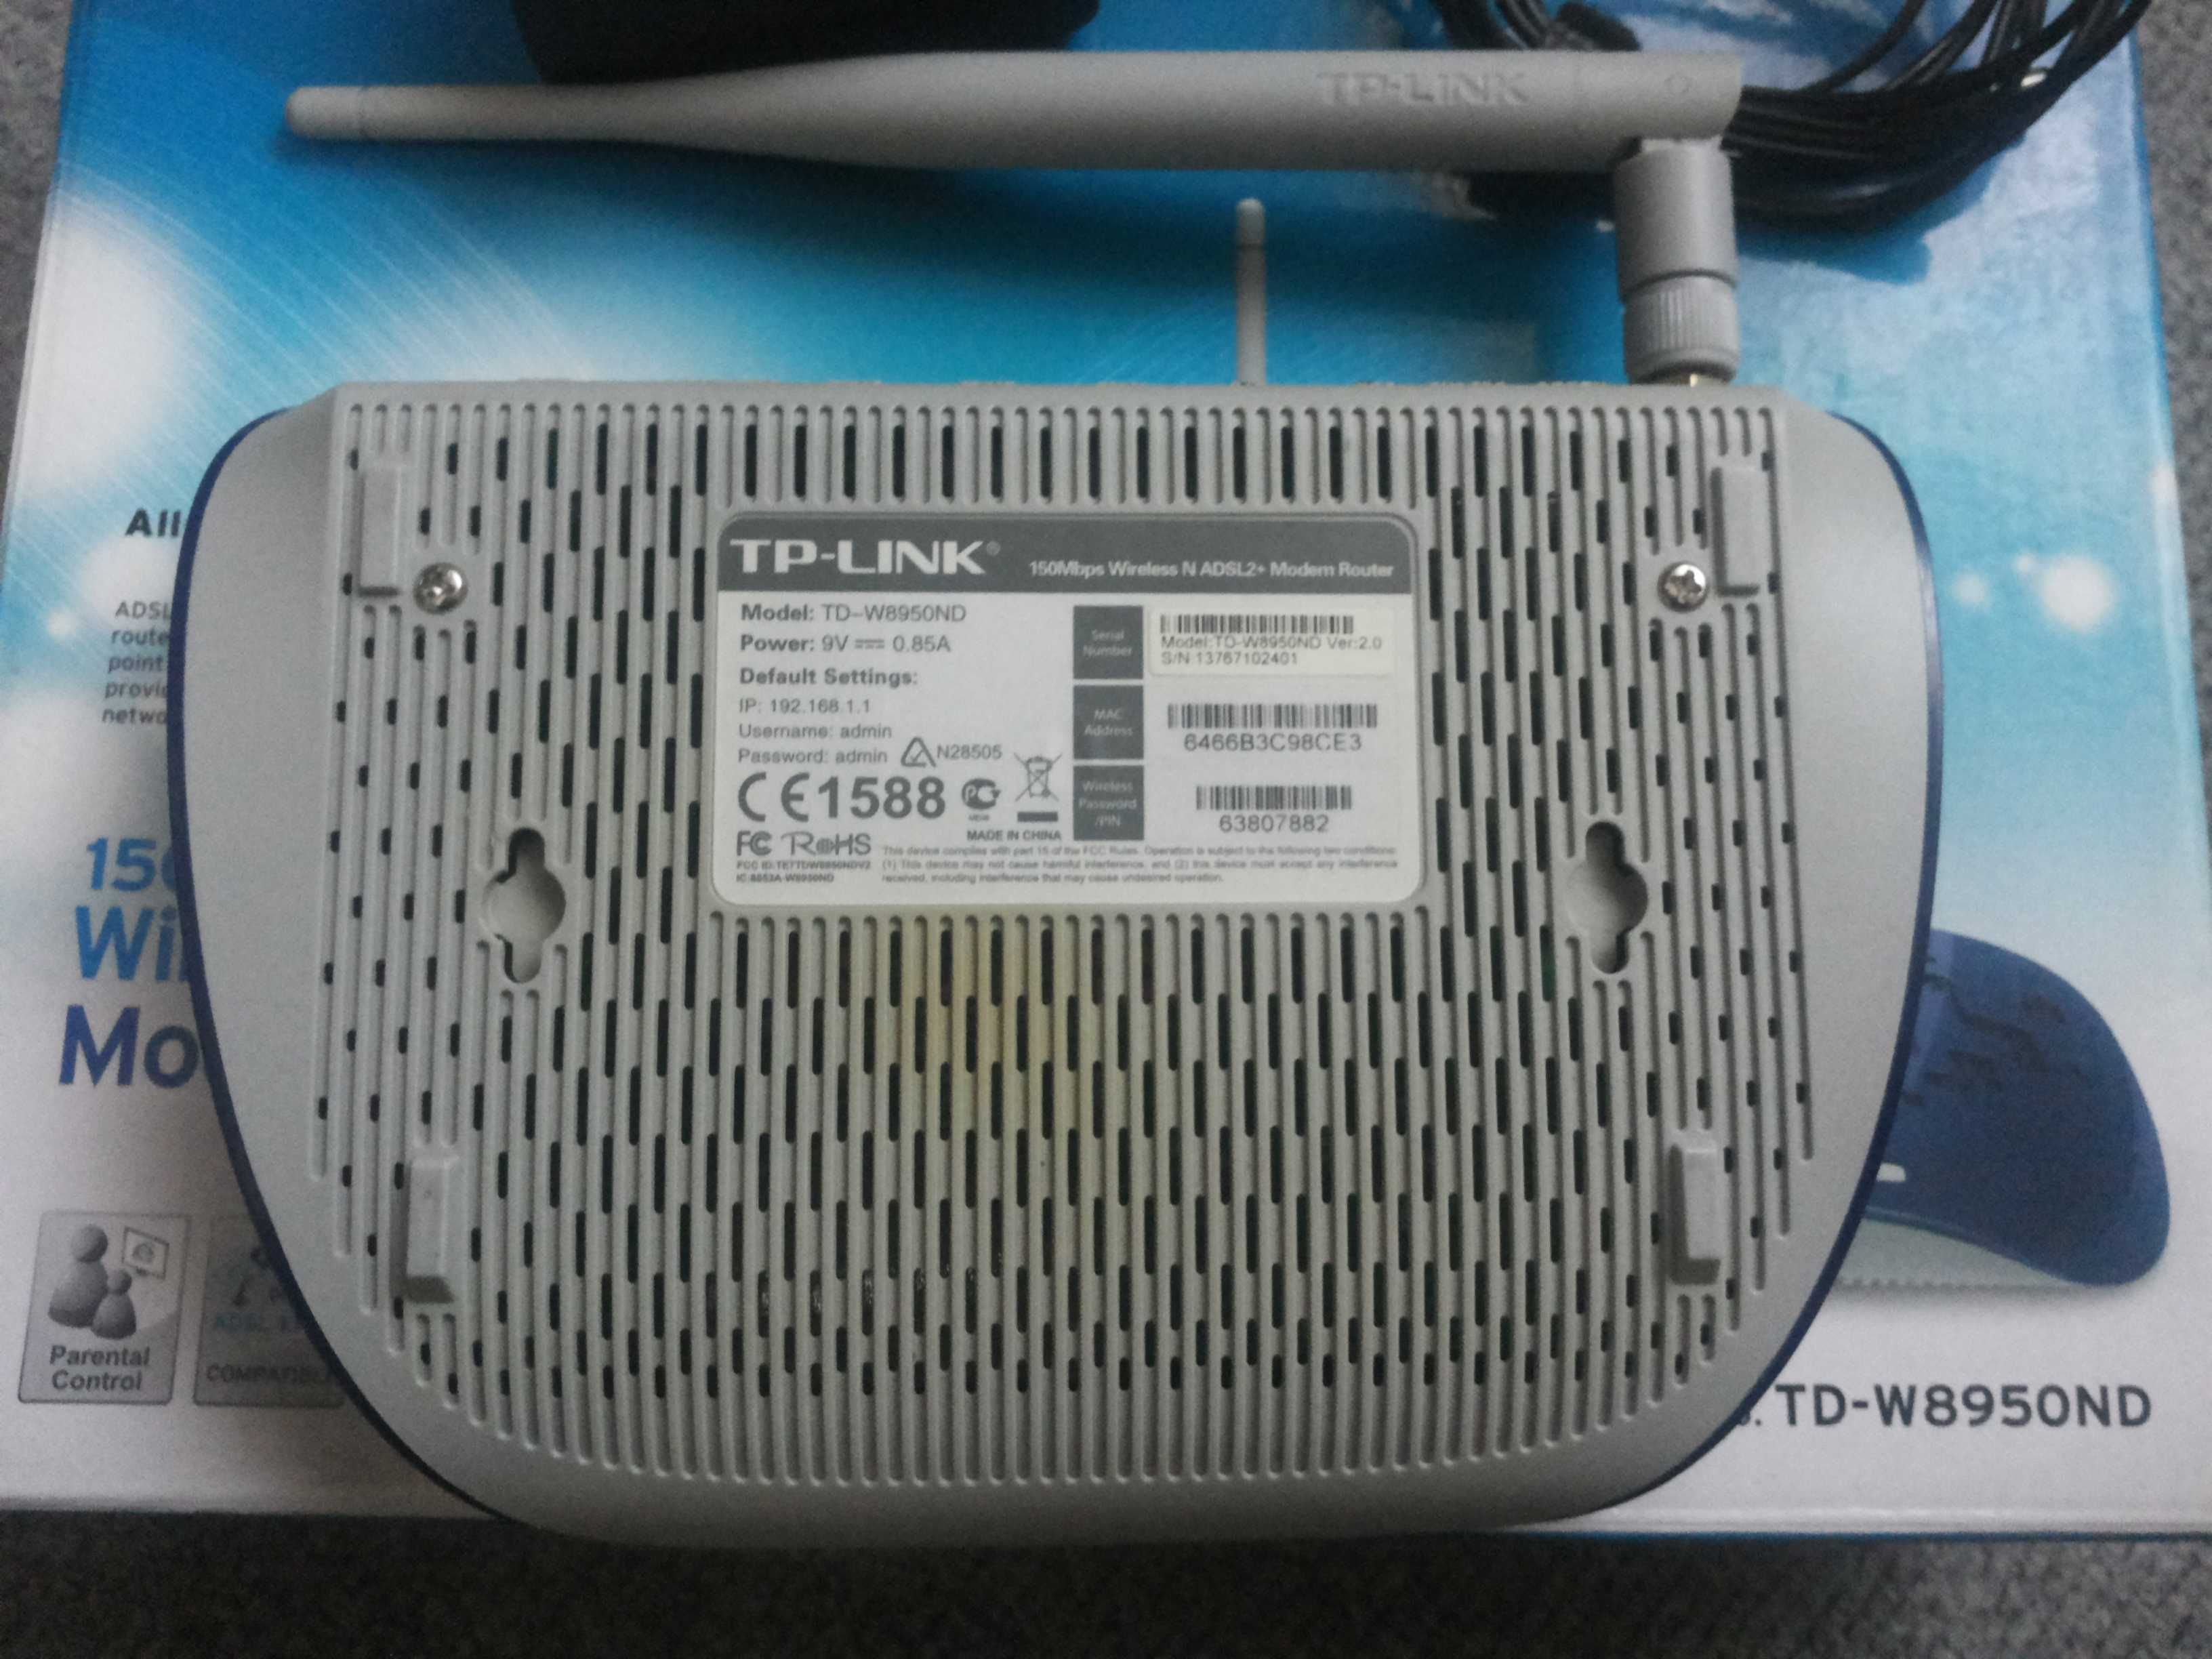 ADSL-Роутер TP-Link TD-W8950ND